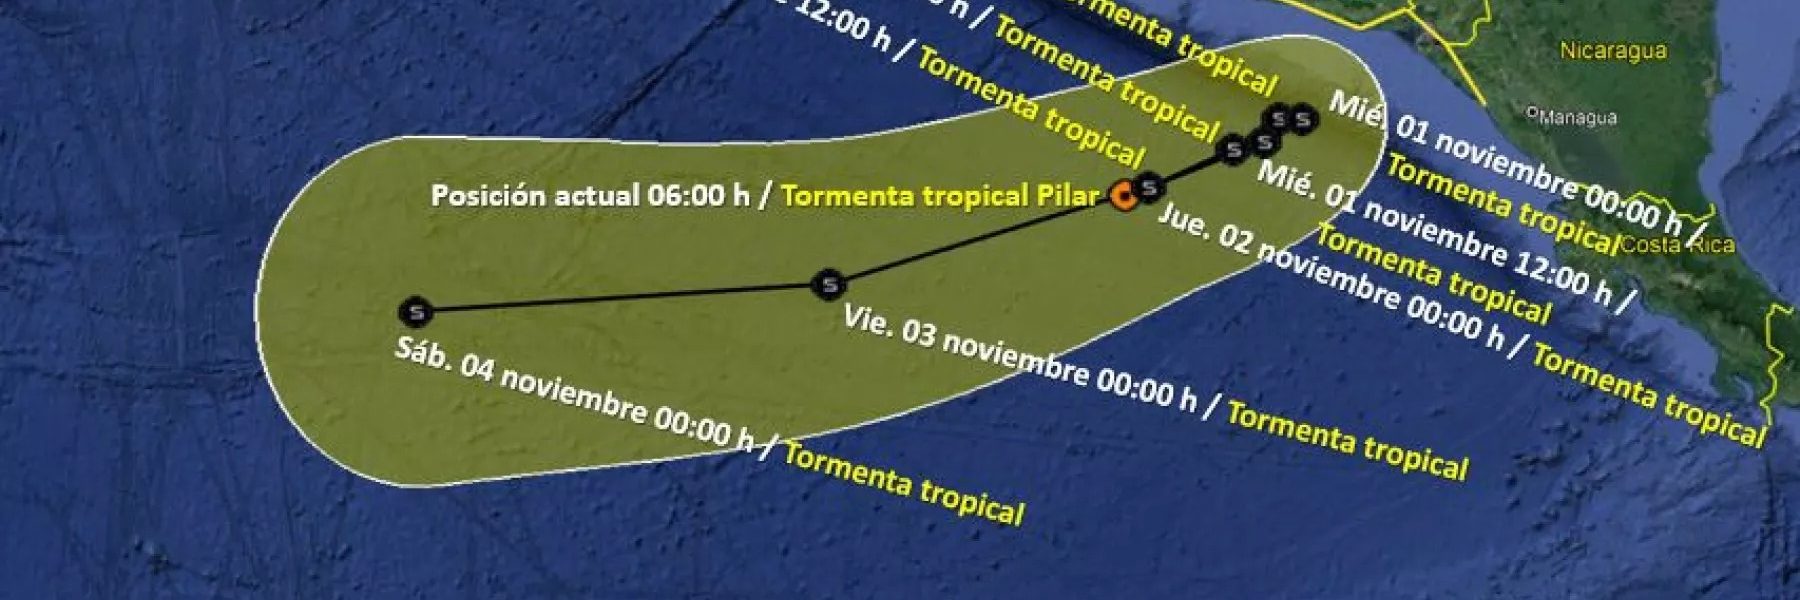 SMN recomienda extremar precauciones debido a la tormenta tropical Pilar